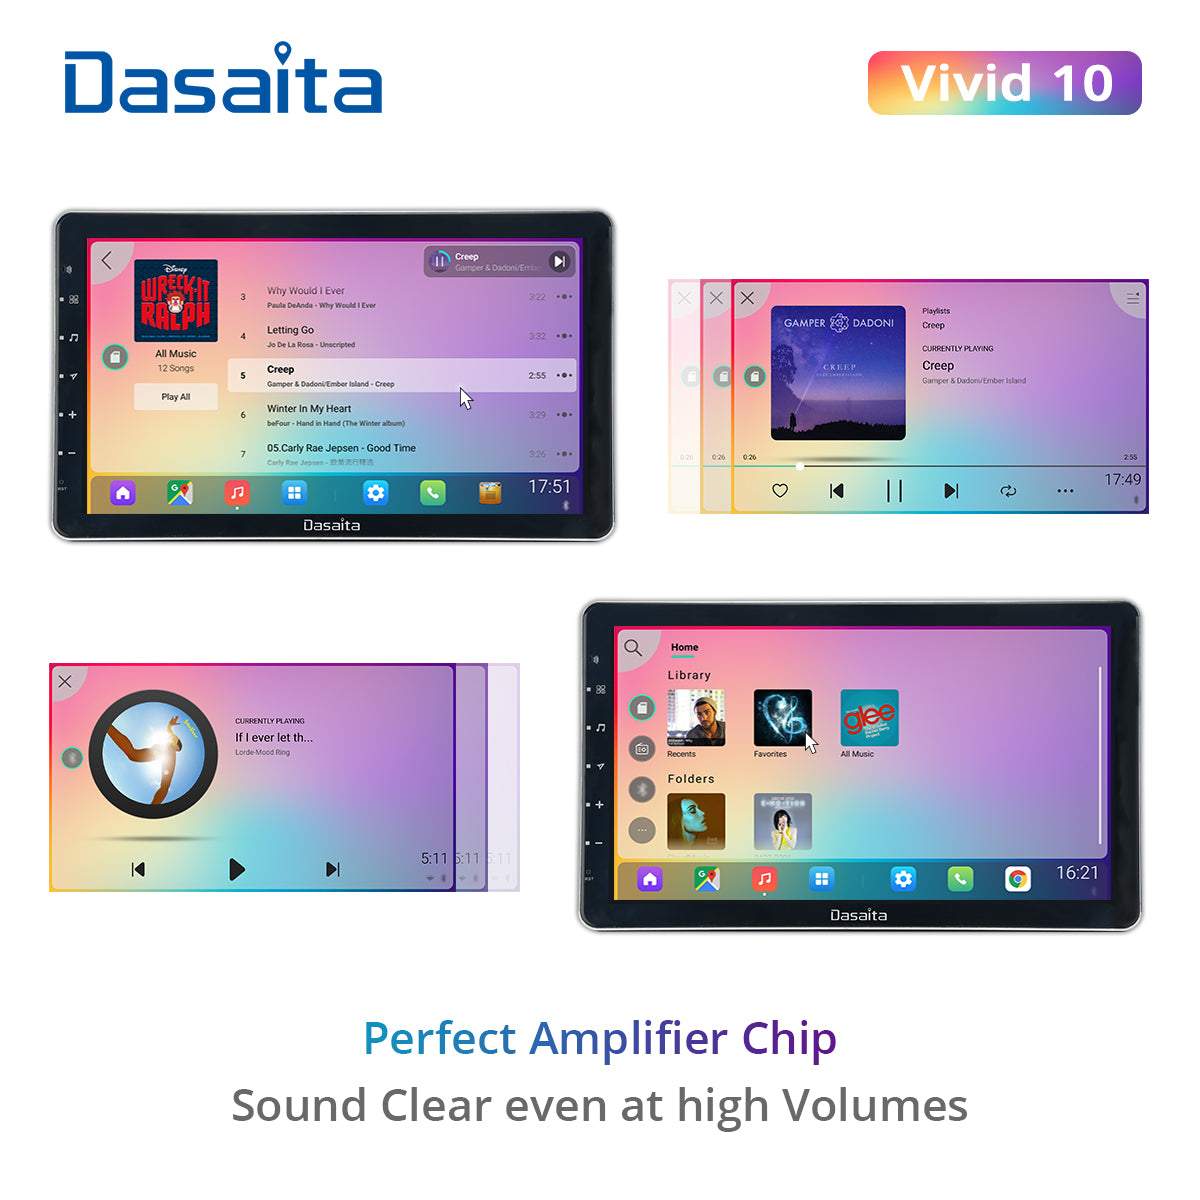 Dasaita Vivid11 Universal Single Din Car Stereo 13.3 Inch Carplay Android Auto PX6 4G+64G Android11 1920*1080 DSP AHD Radio